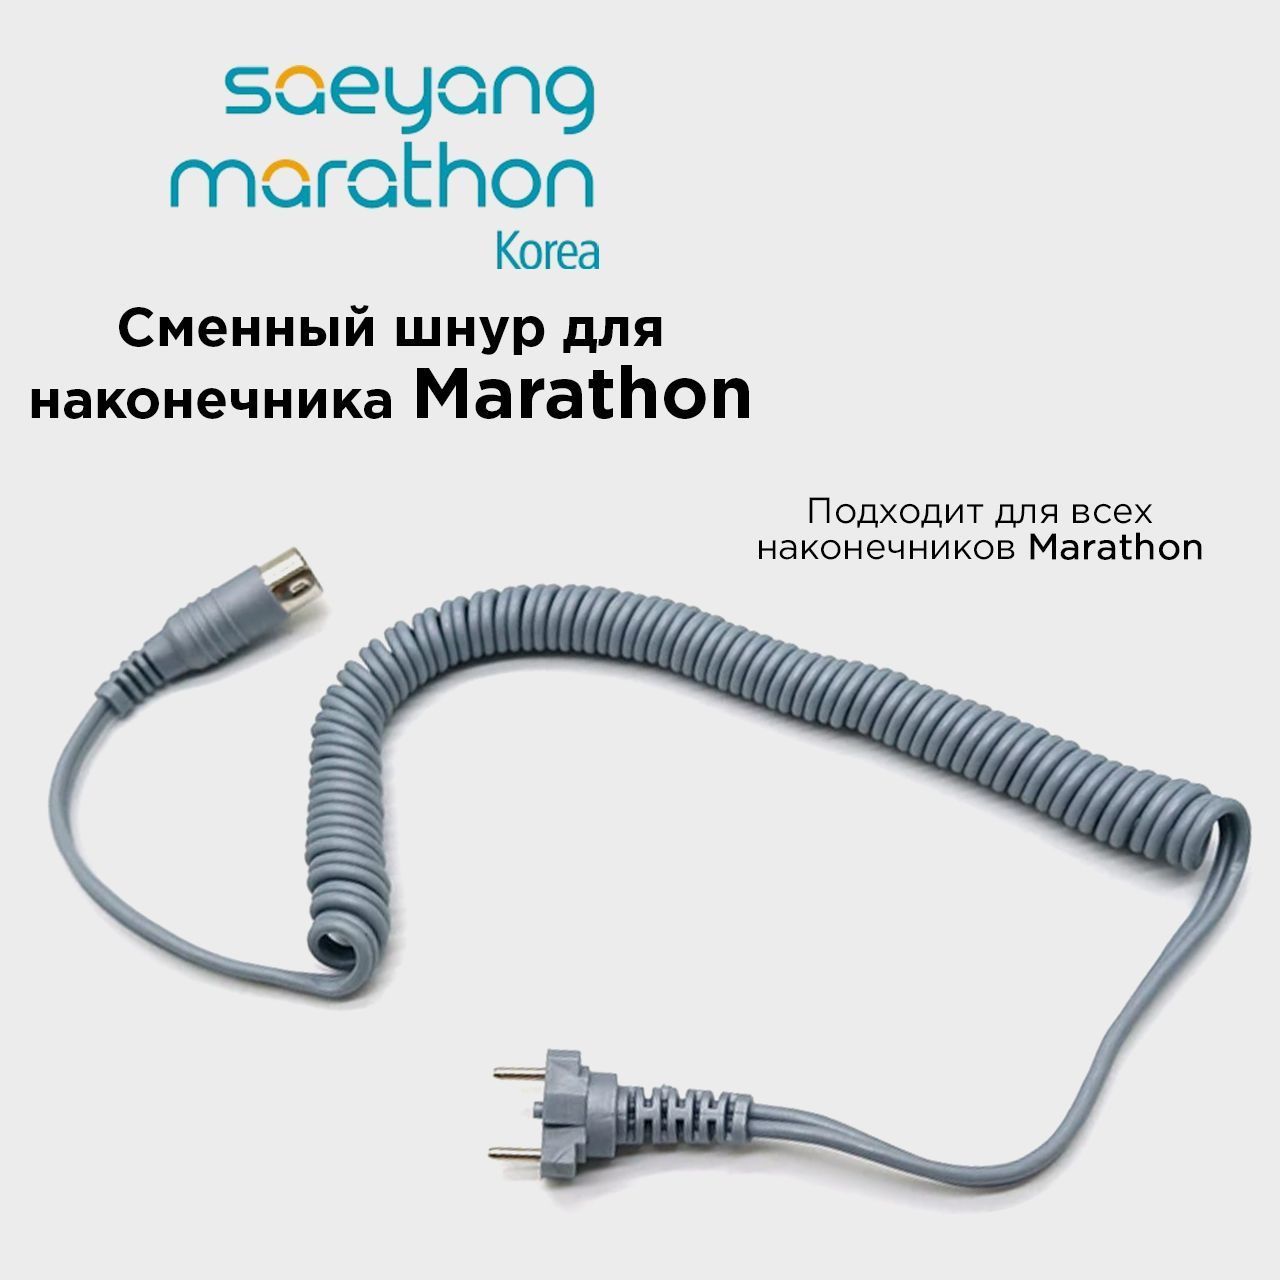 Провод для микромотора Marathon шнур для ручки наконечника Маратон Серый якоб пора купаться